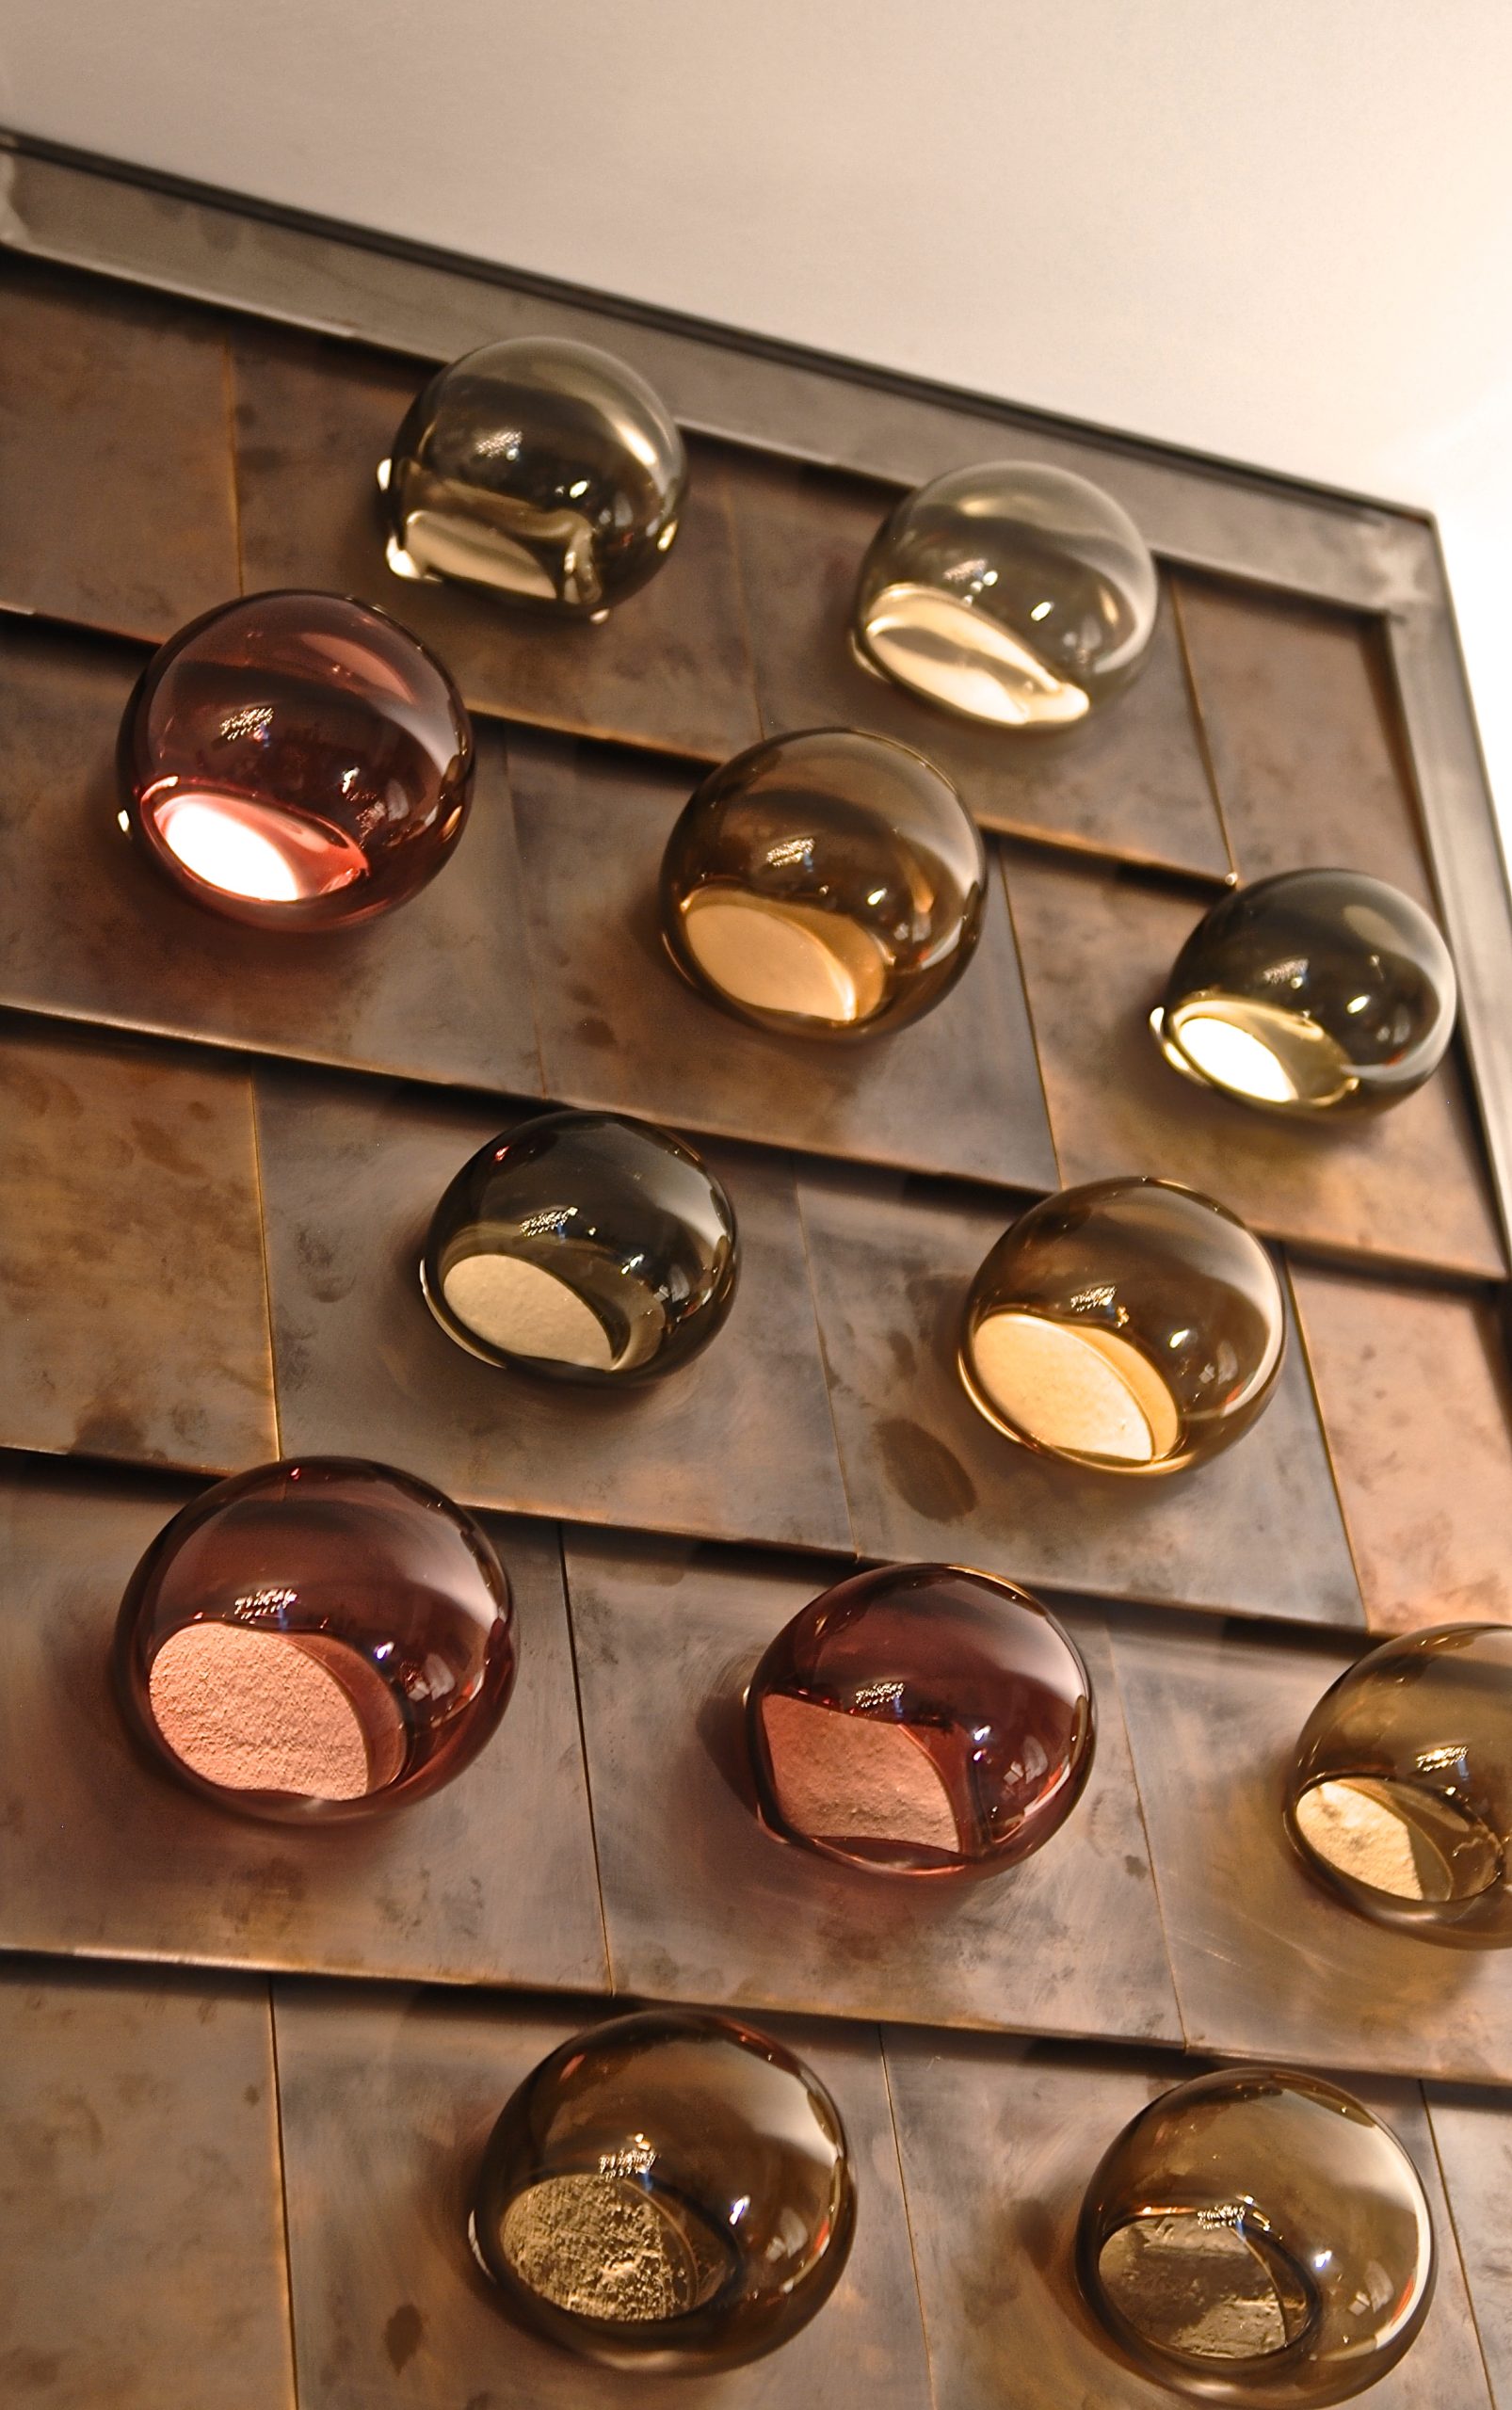 Blown Murano glass bubbles in brown shades.